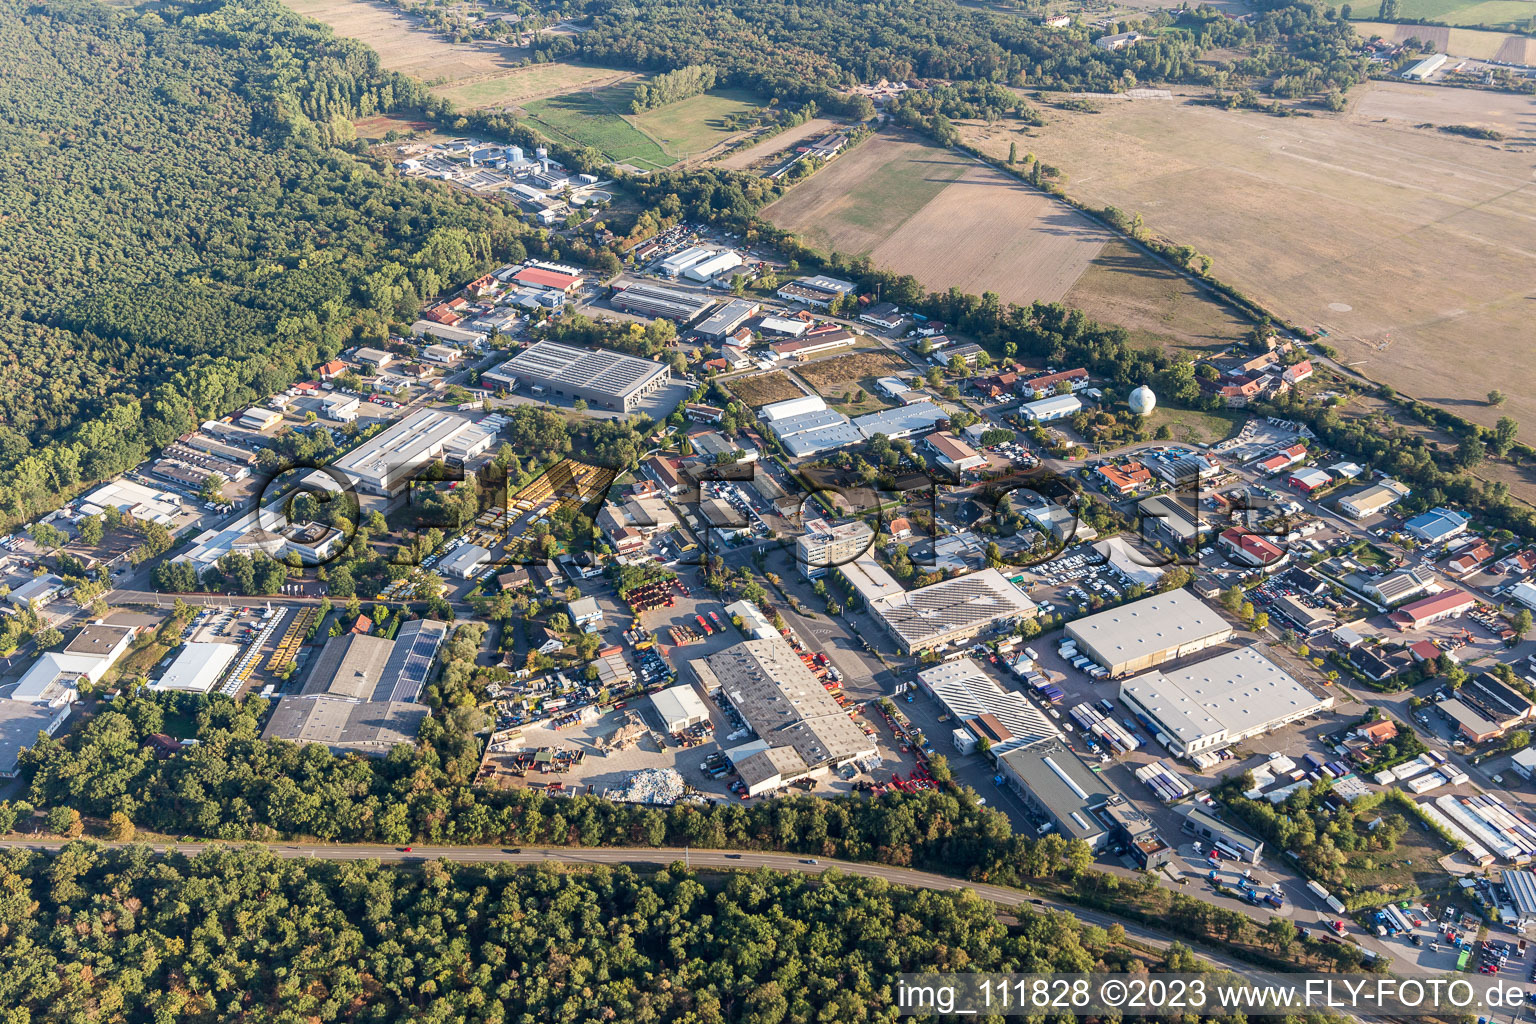 Vue aérienne de Zone industrielle à Altenschemel à le quartier Speyerdorf in Neustadt an der Weinstraße dans le département Rhénanie-Palatinat, Allemagne